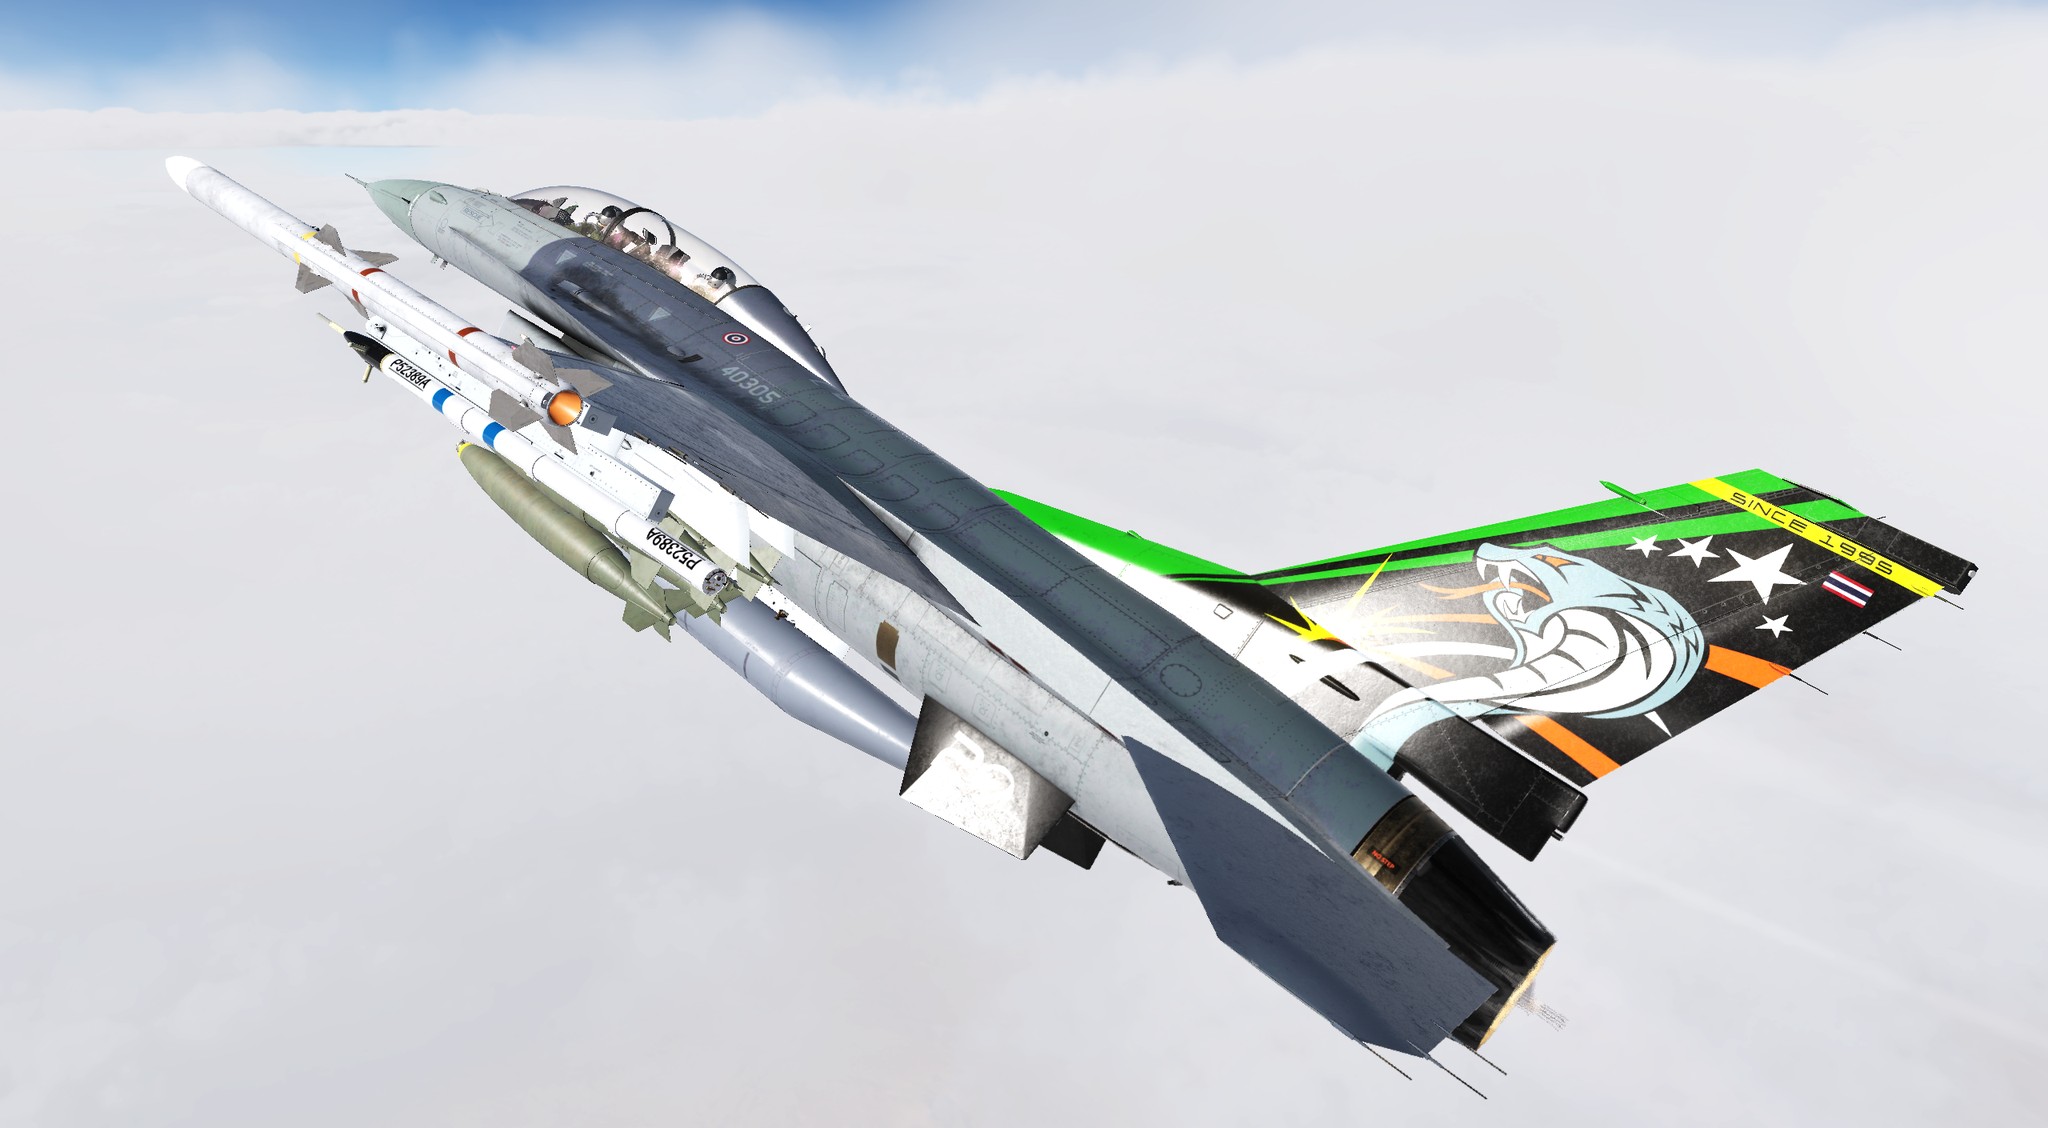 RTAF 403 Sqn F-16D bl50-52 (No spine) "20th Anniversary"